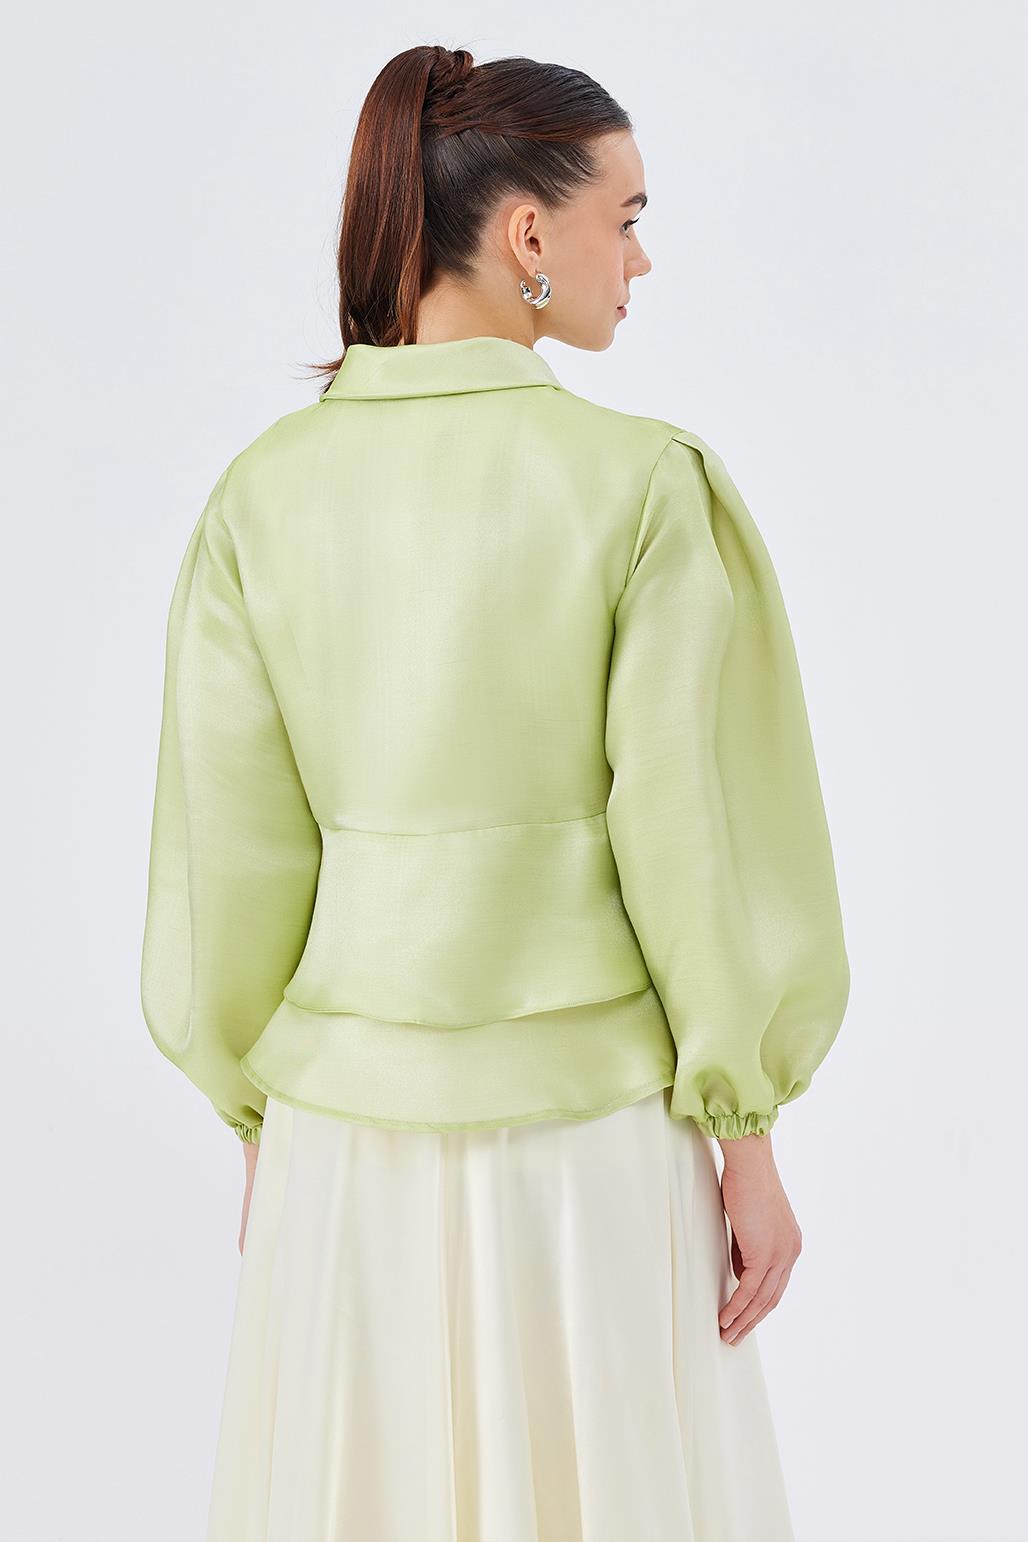 Liva Lace-Up Jacket Green